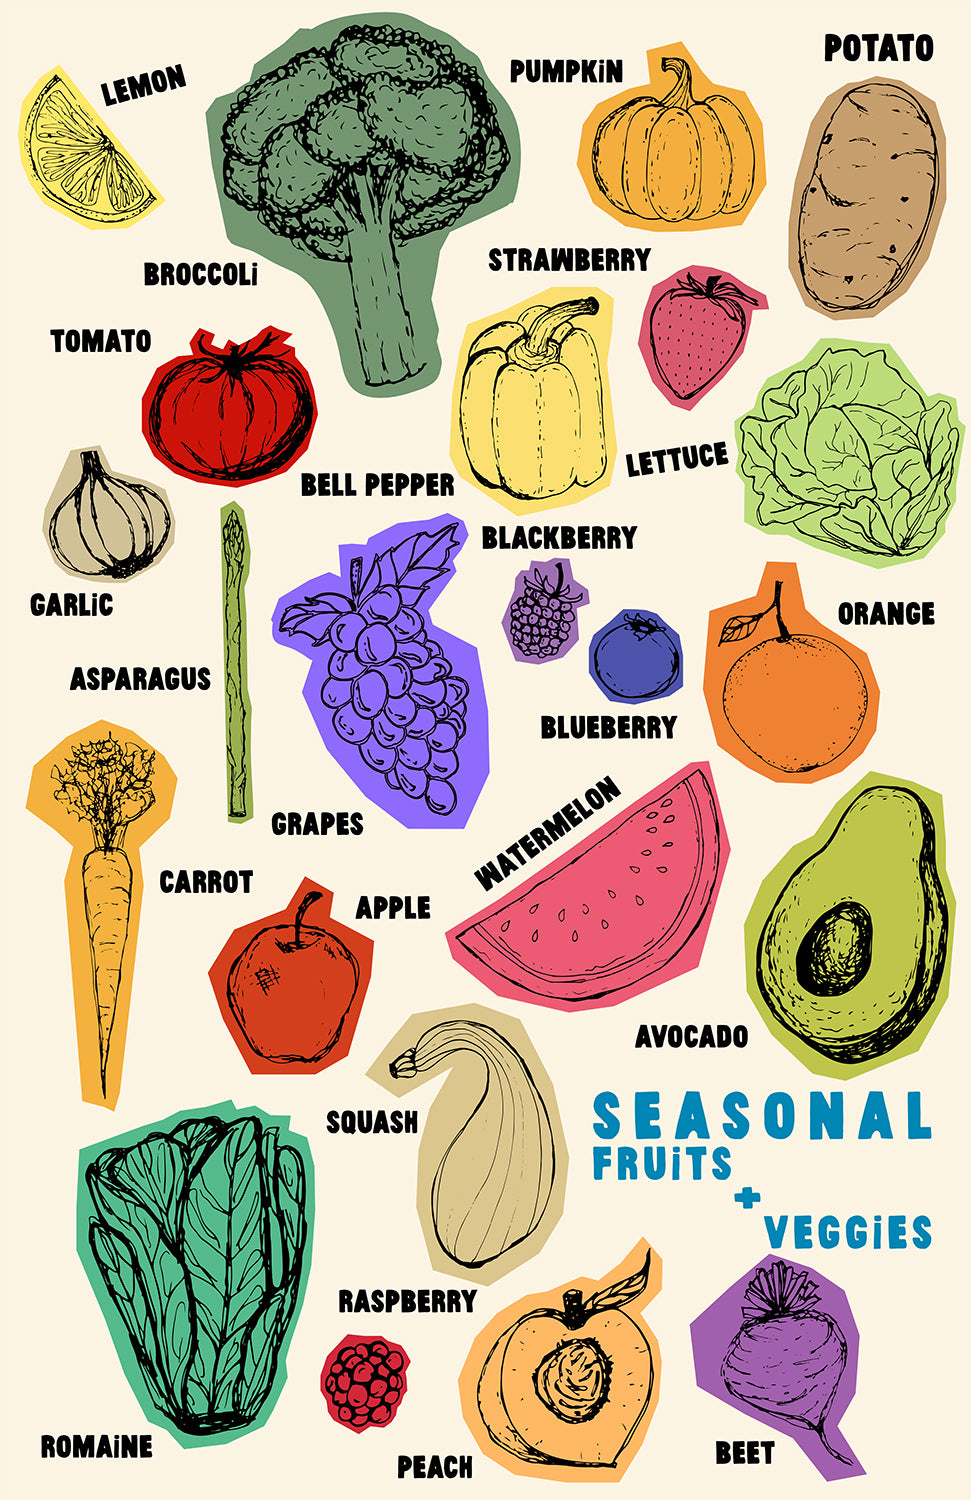 SEASONAL FRUITS & VEGGIES